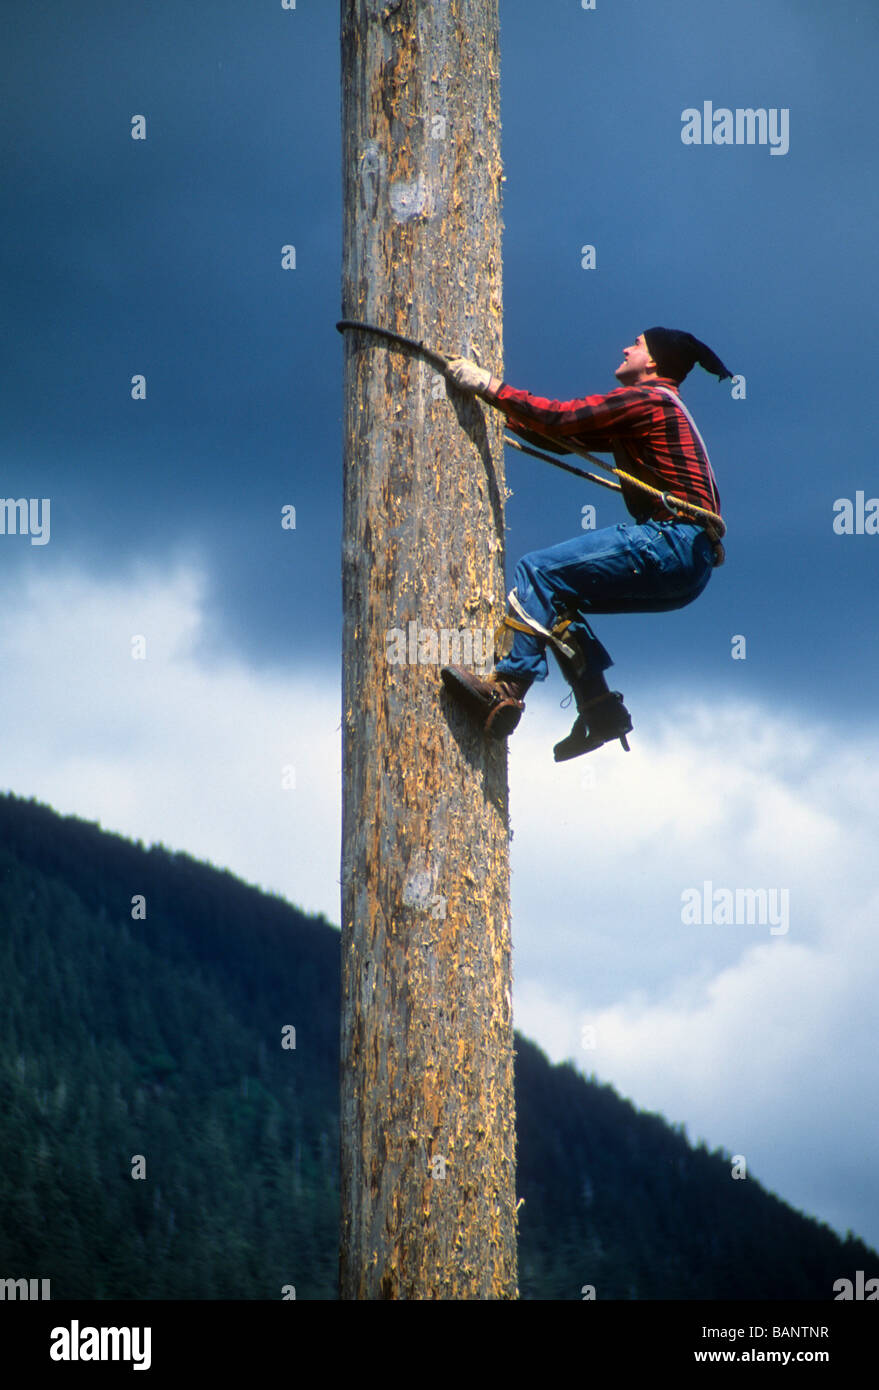 Lumberjack log tree climb rope Alaska danger show risk thrill tall high  demo sport speed Stock Photo - Alamy